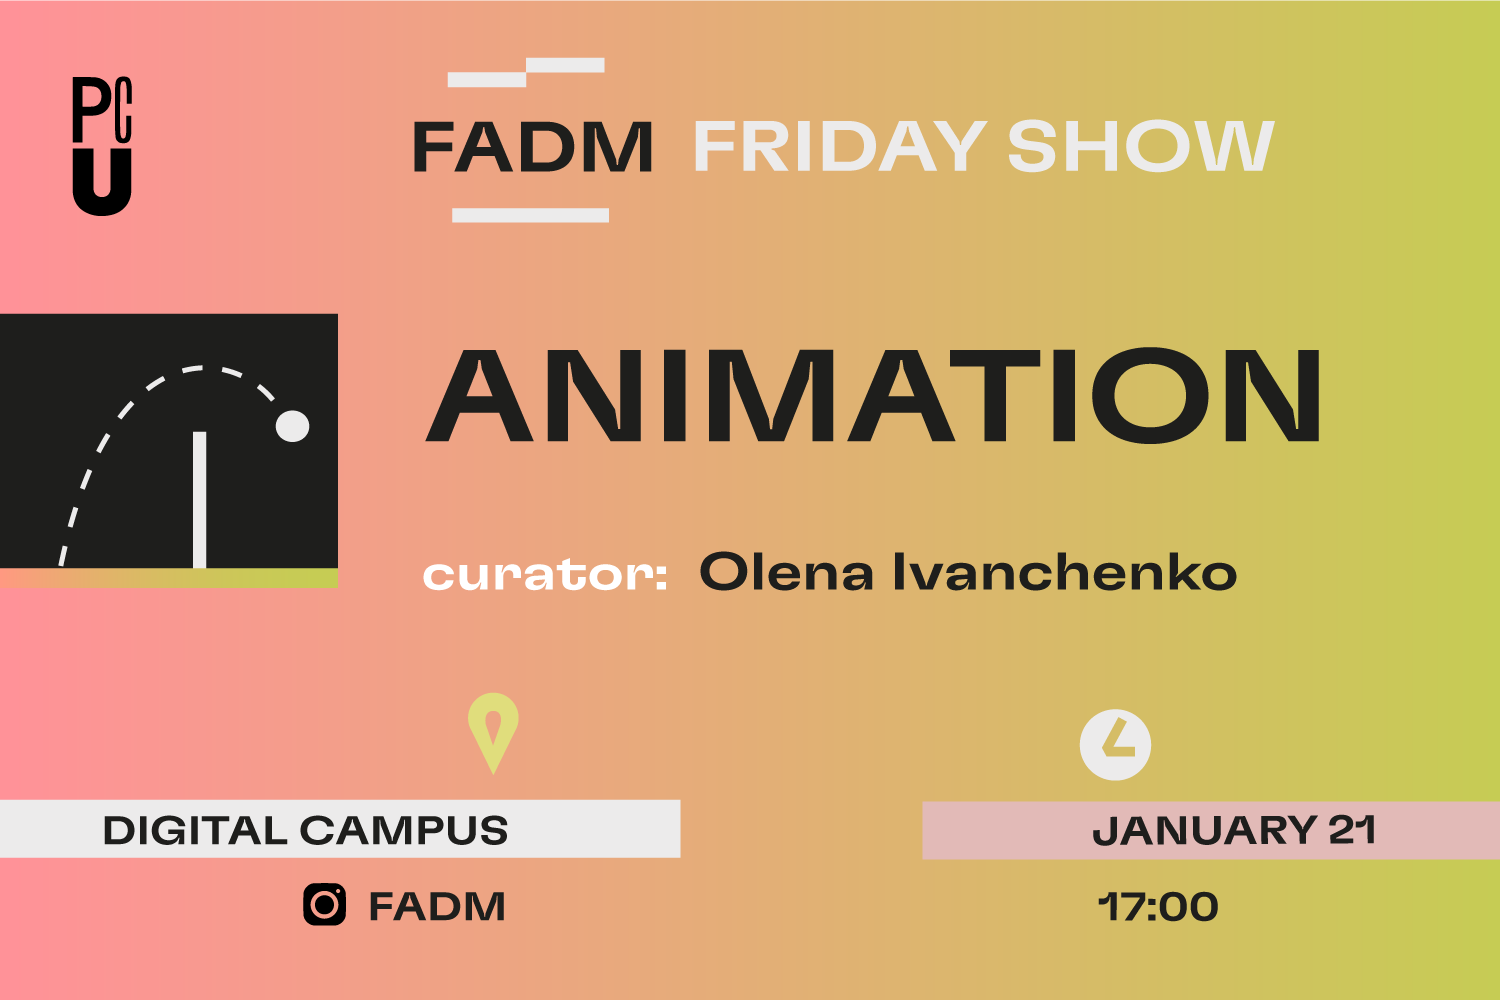 PCU Friday Show Animation